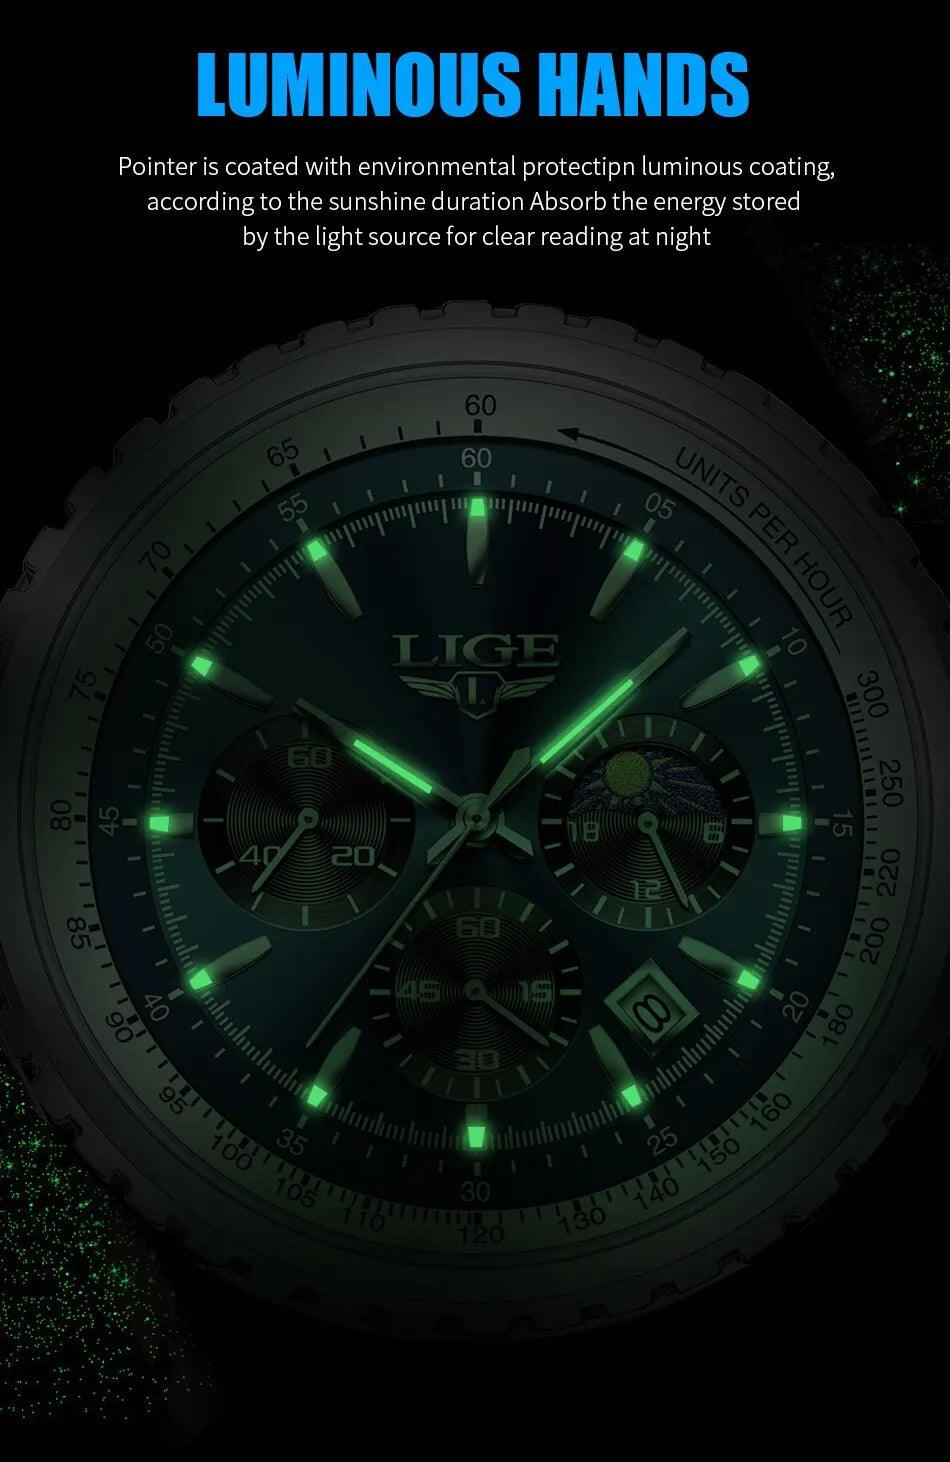 New Arrival Top Brand Luxury Quartz Waterproof Luminous Dial Date Chronograph Sports Wristwatches - The Jewellery Supermarket